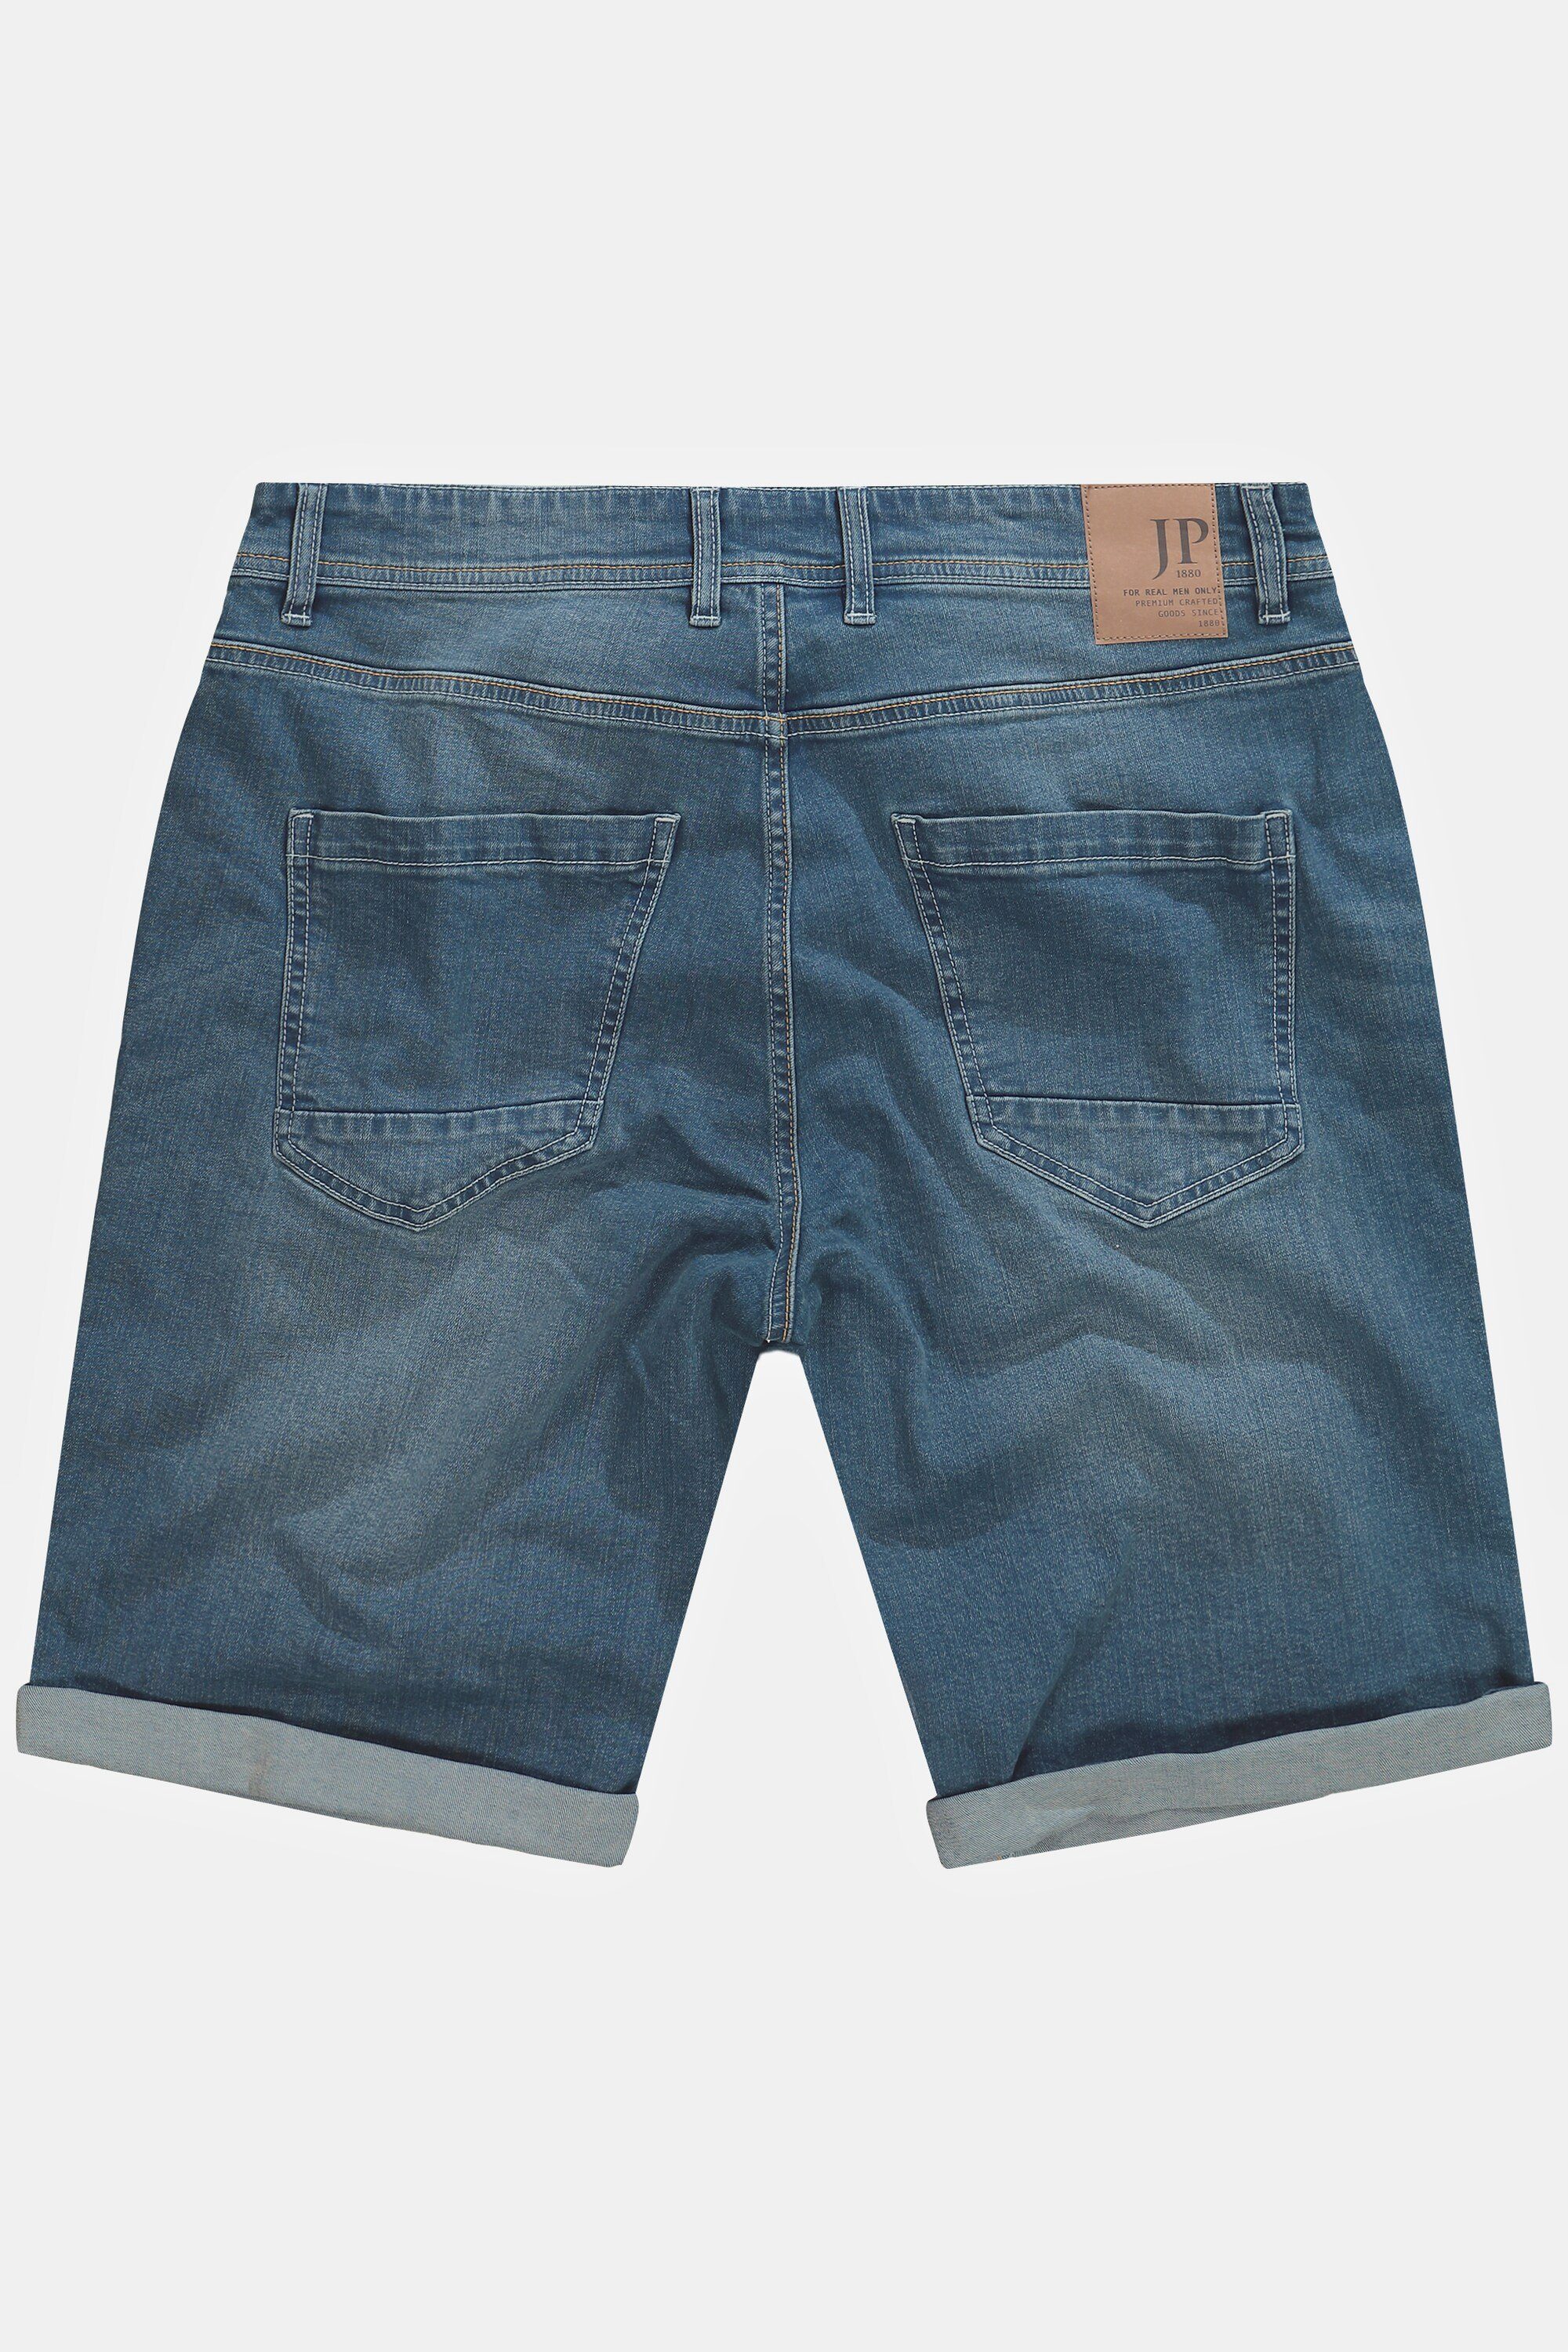 JP1880 Jeansbermudas Bermuda Bauchfit Jeans High-Stretch blue 5-Pocket denim